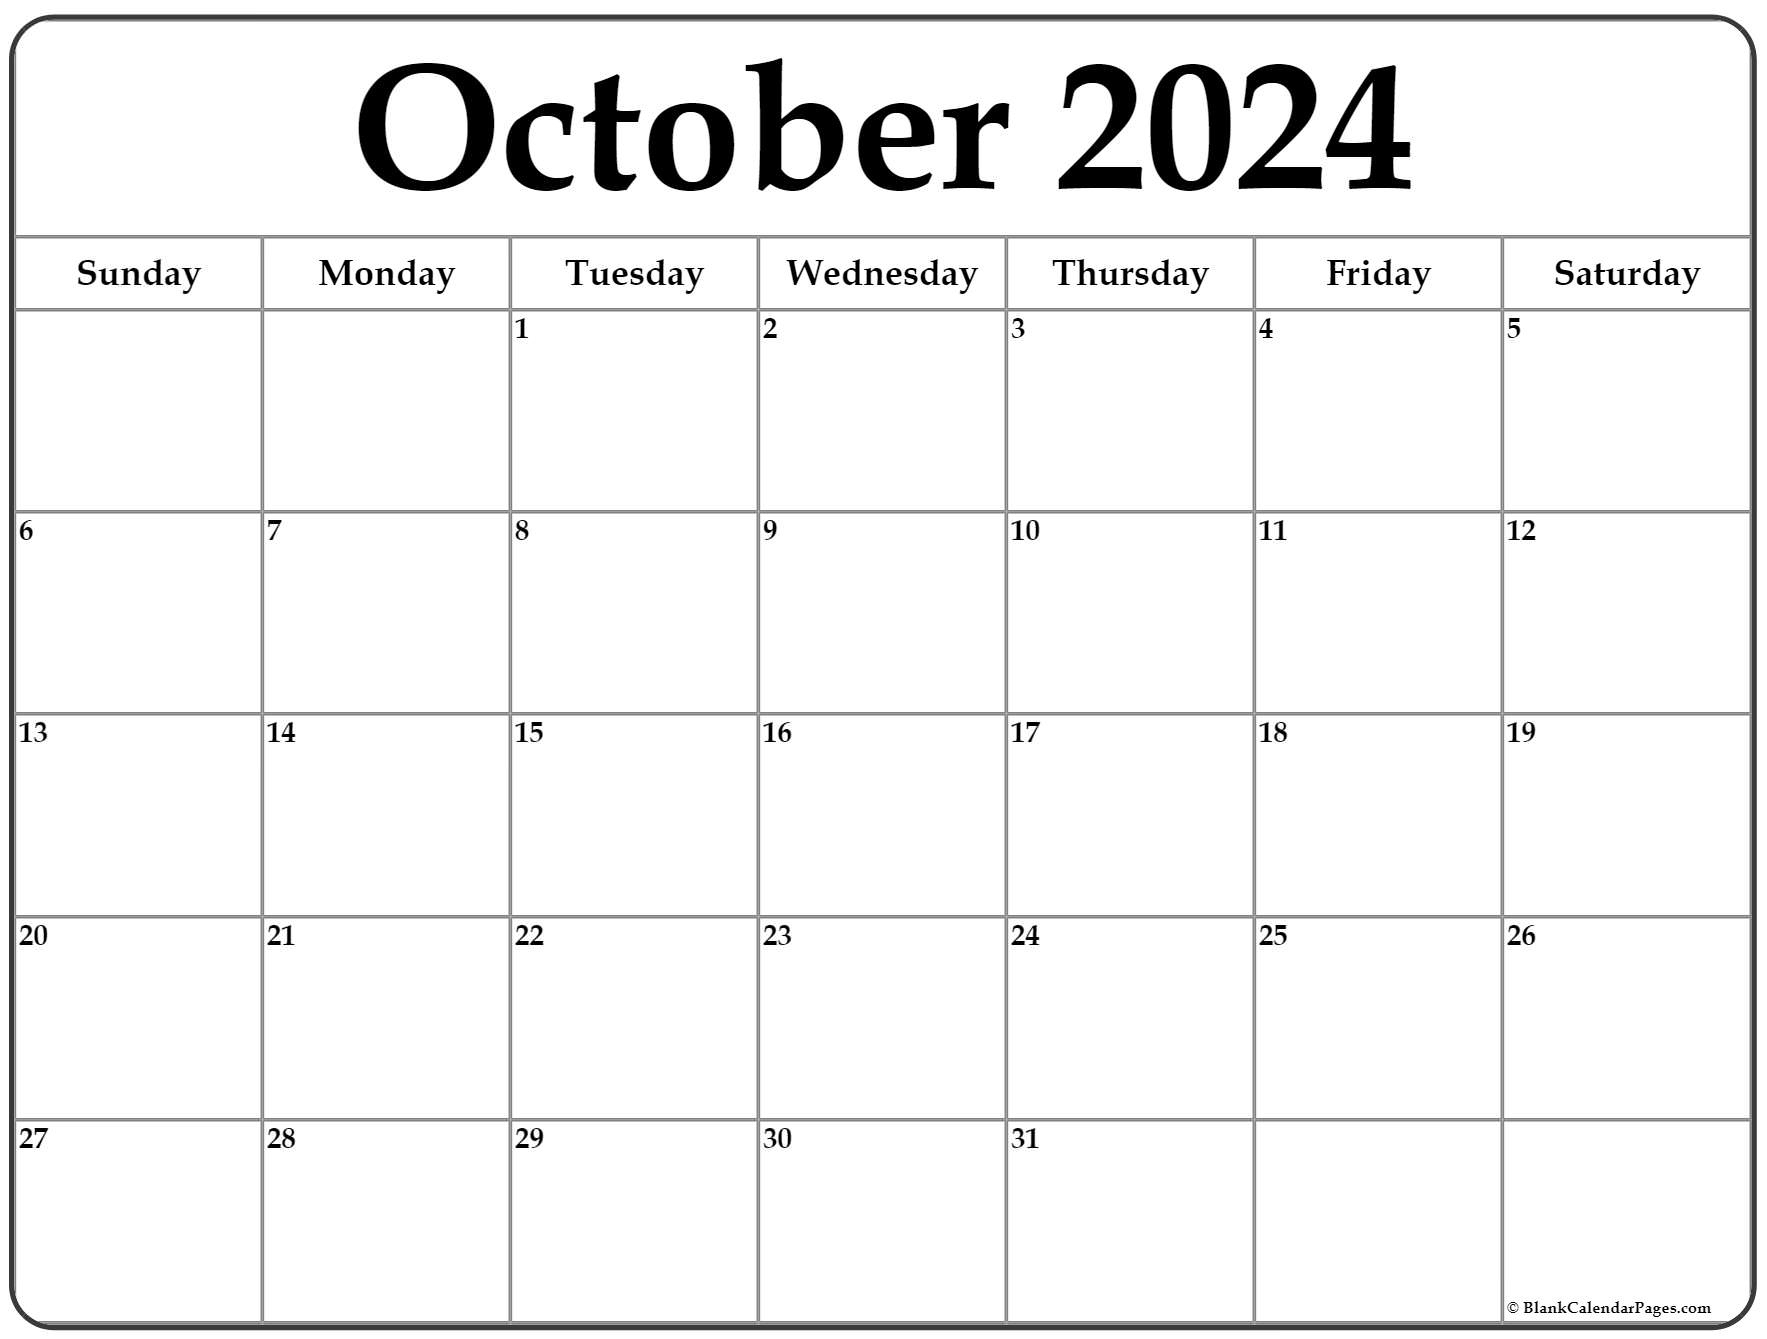 October 2024 Calendar | Free Printable Calendar | Free Printable Calendar October 2024